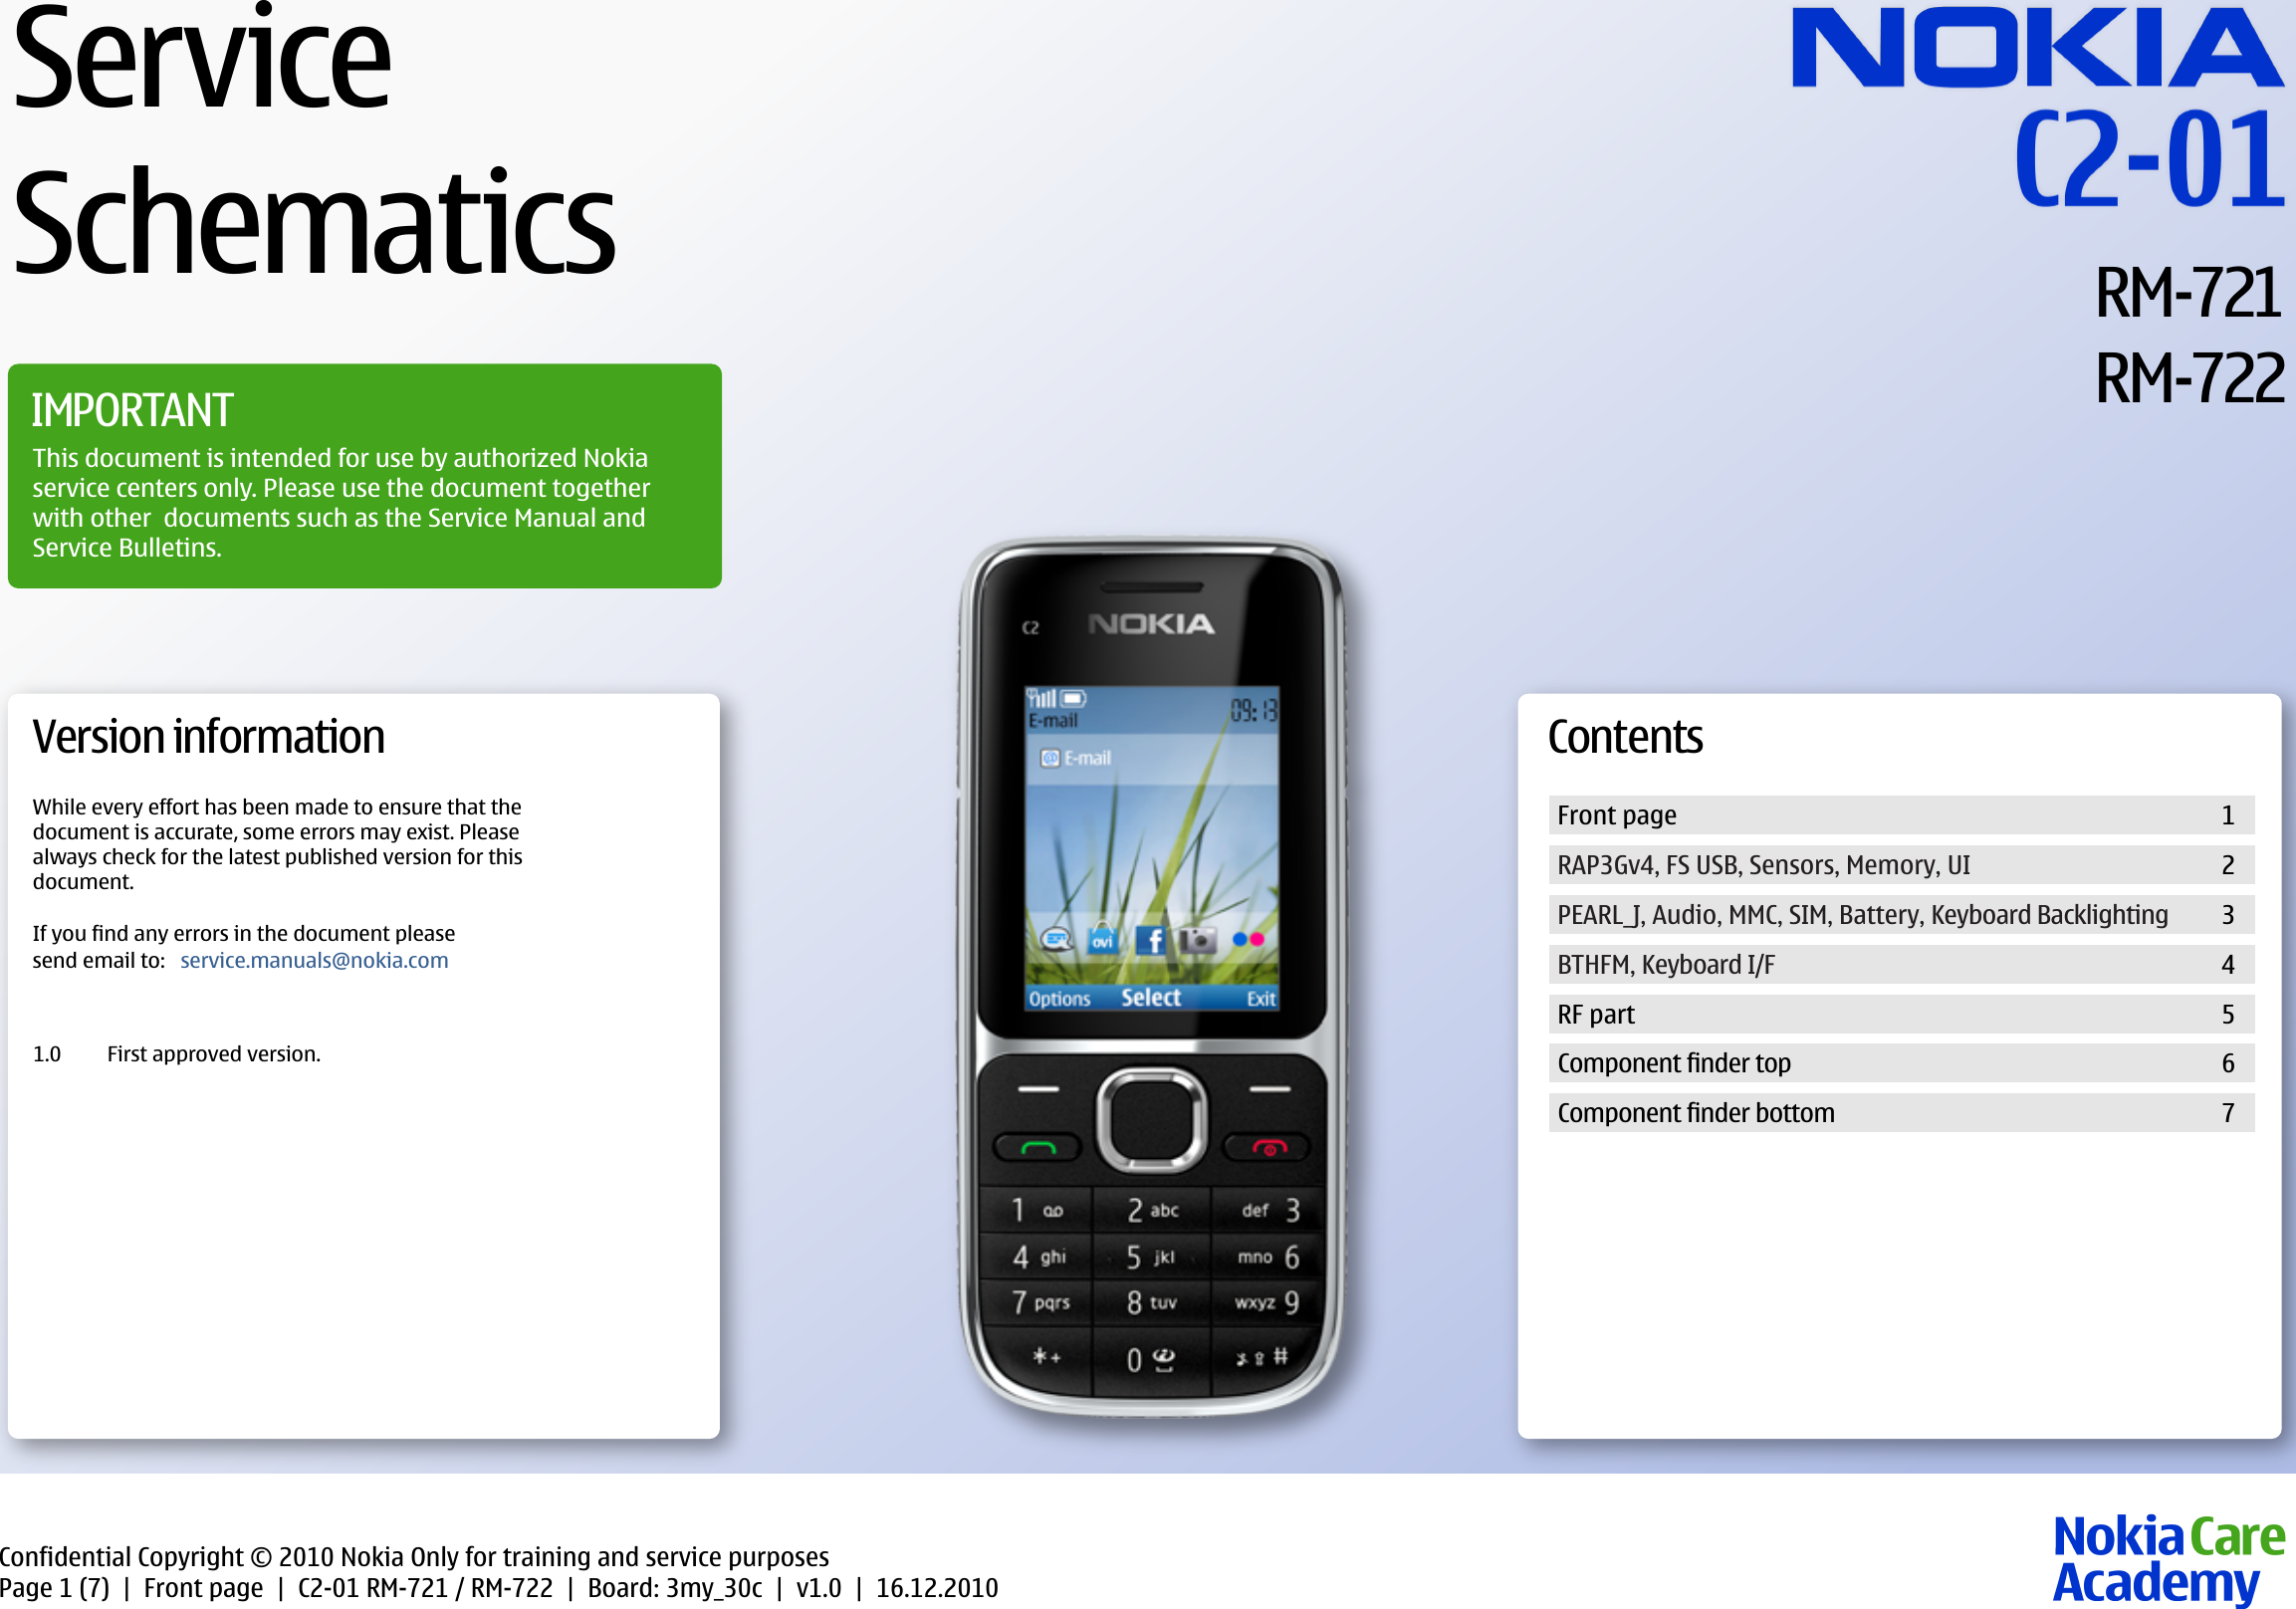 Page 1 of 7 - Nokia C2-01 RM-721 RM-722 Service Schematics V1